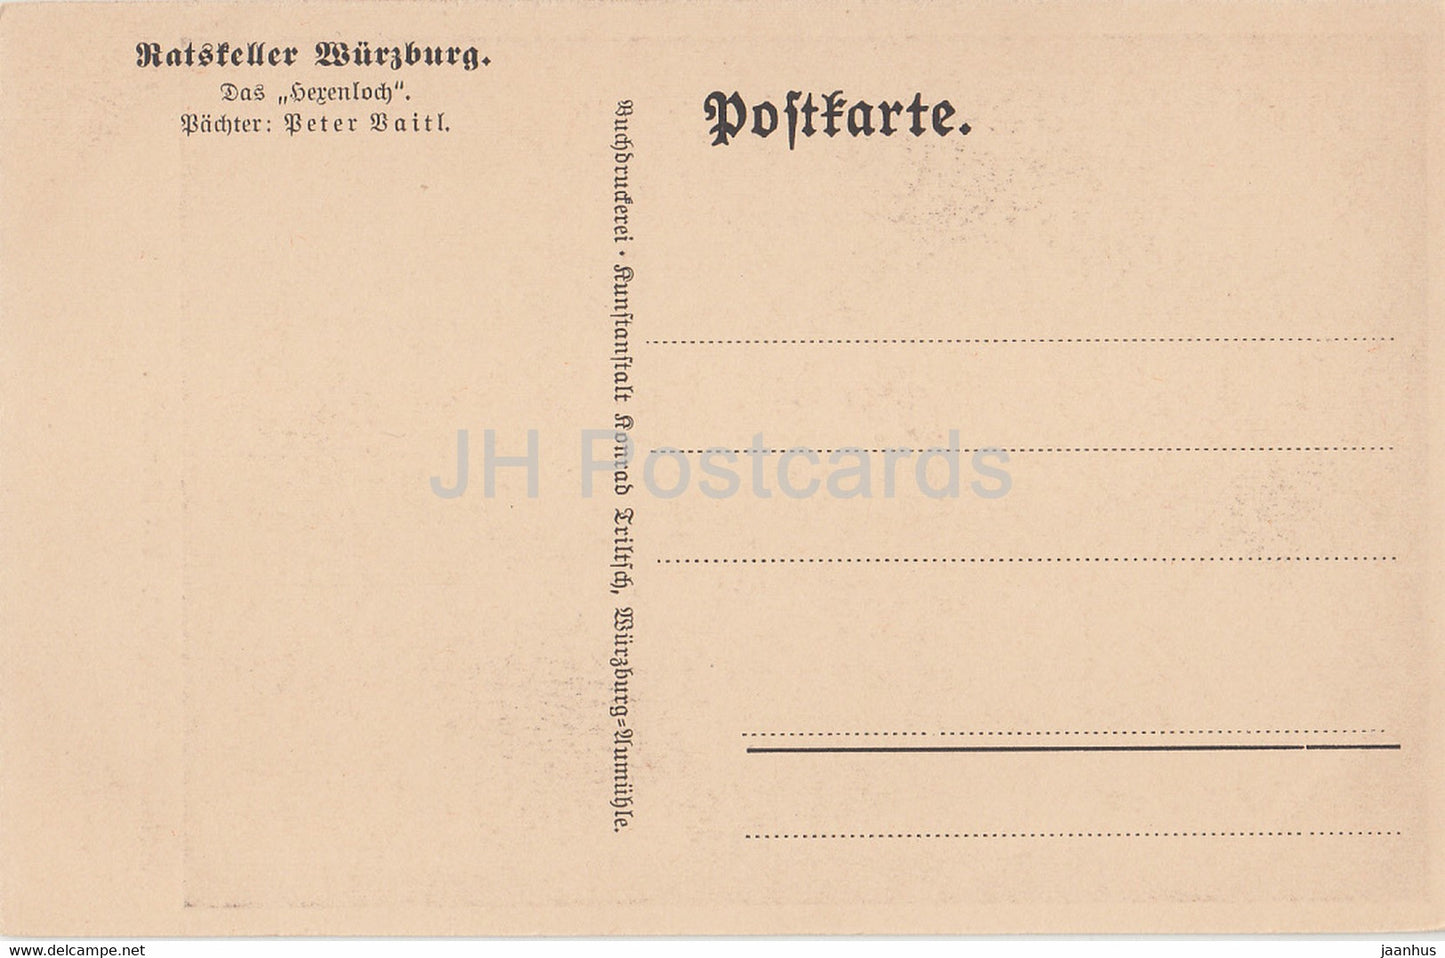 Ratskeller Wurzburg - Das Herenloch - old postcard - 1920s - Germany - unused